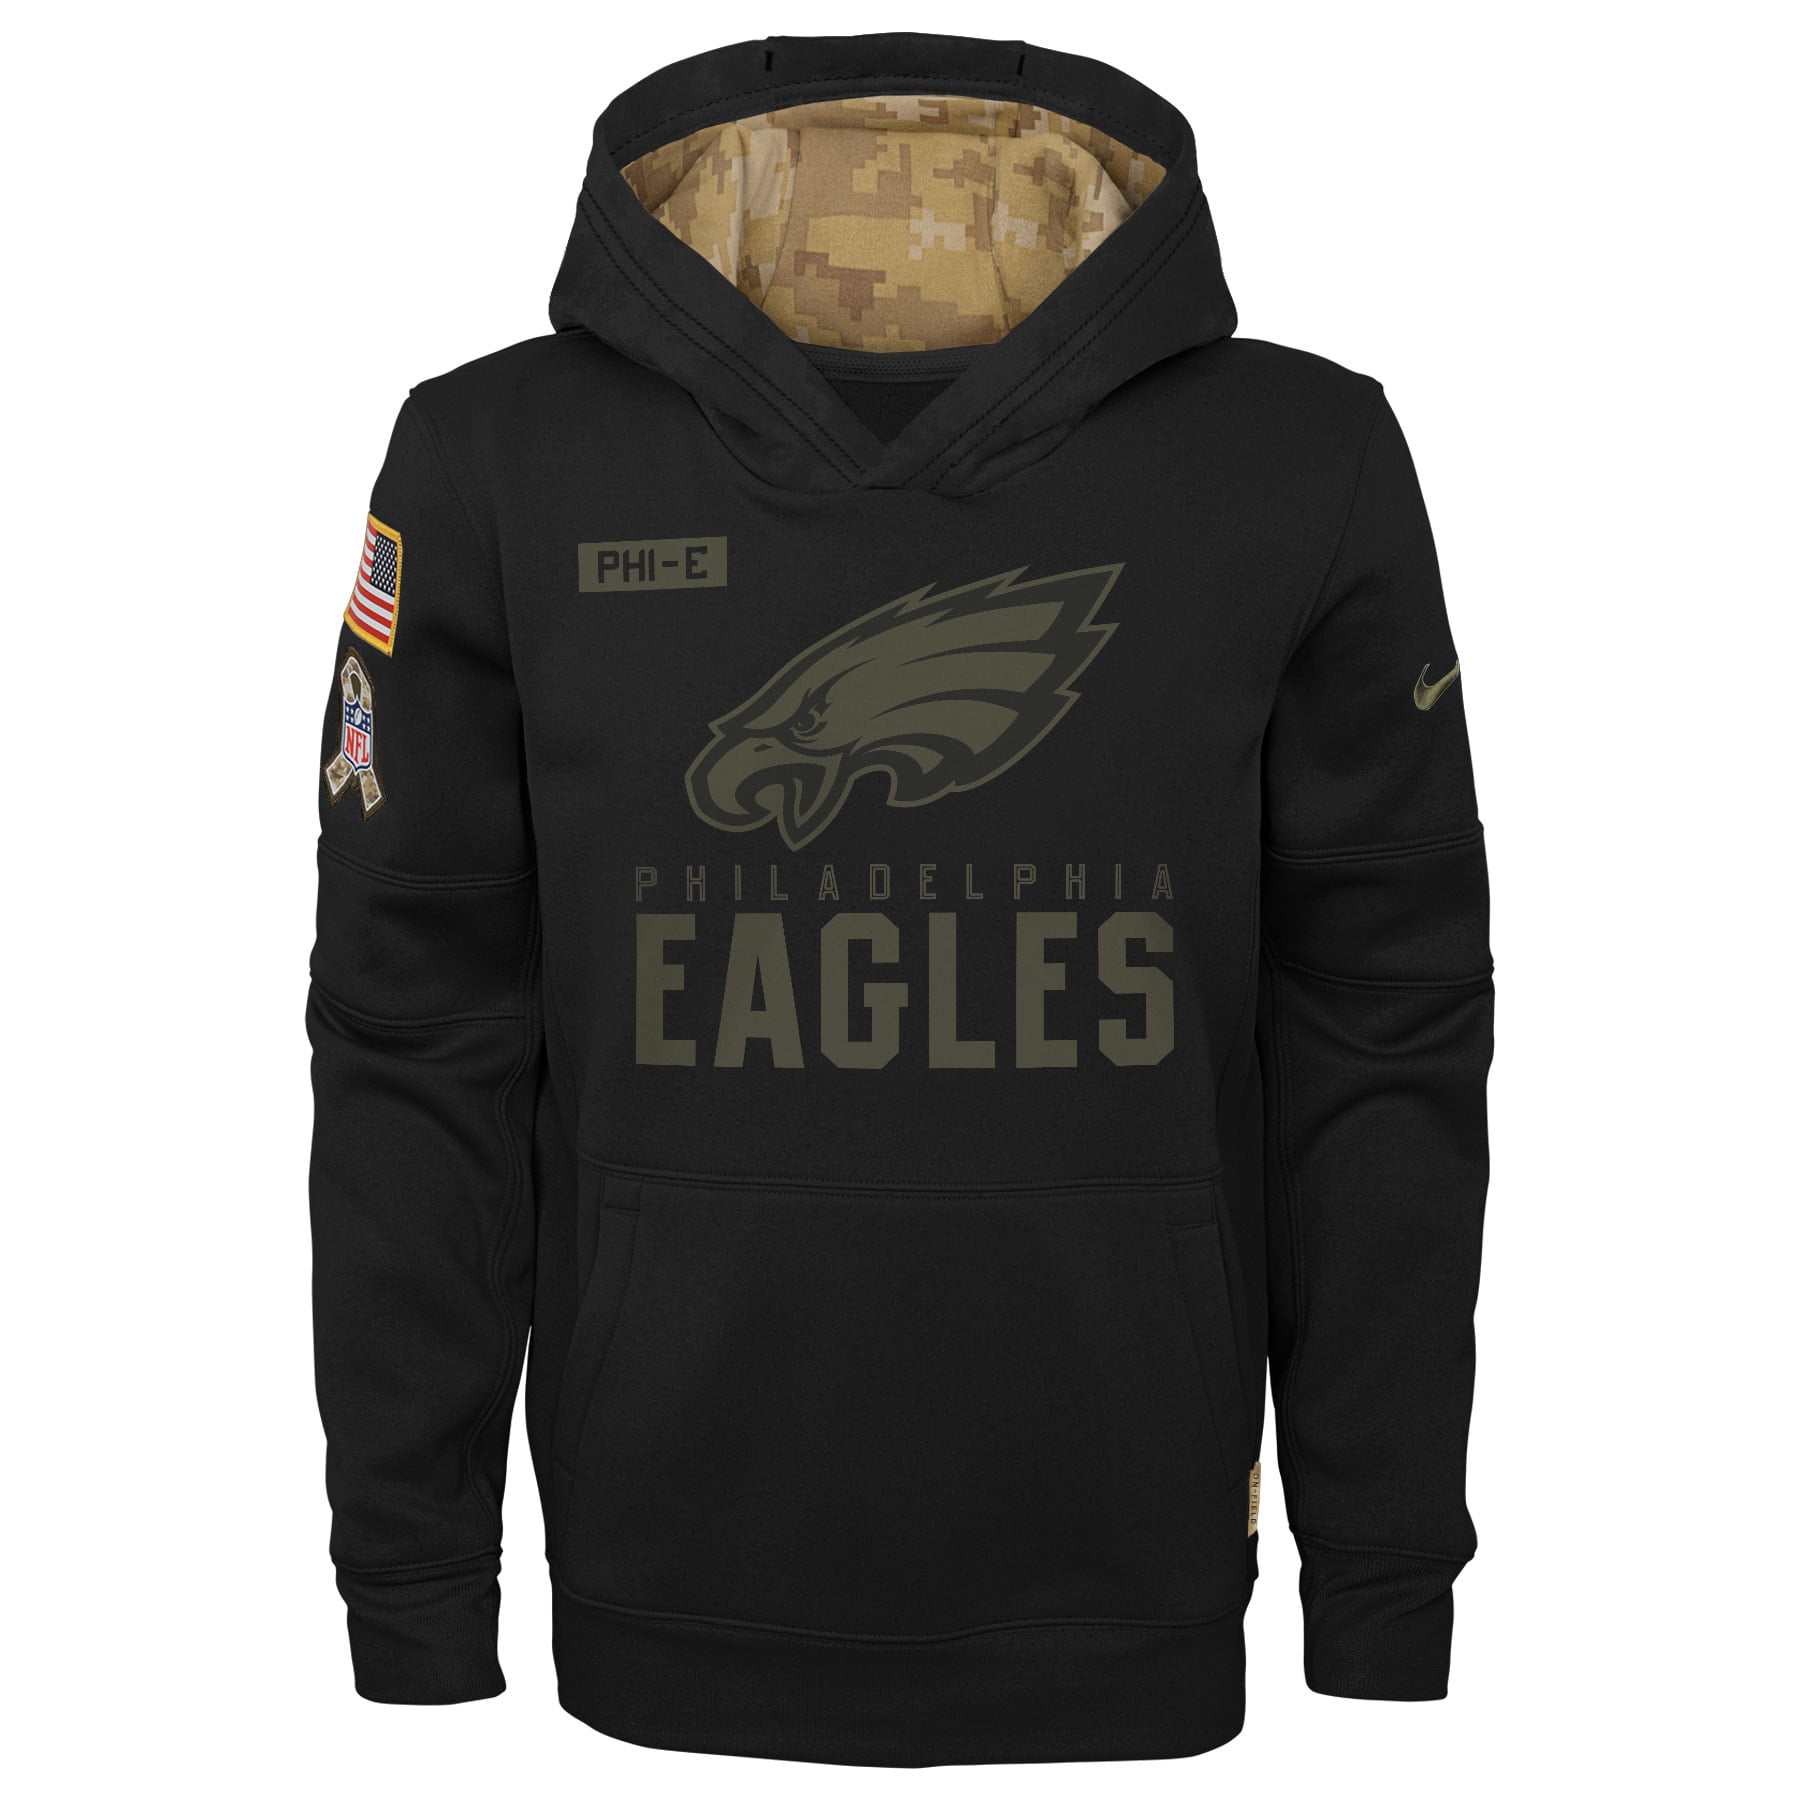 eagles military sweatshirt,transtekno 